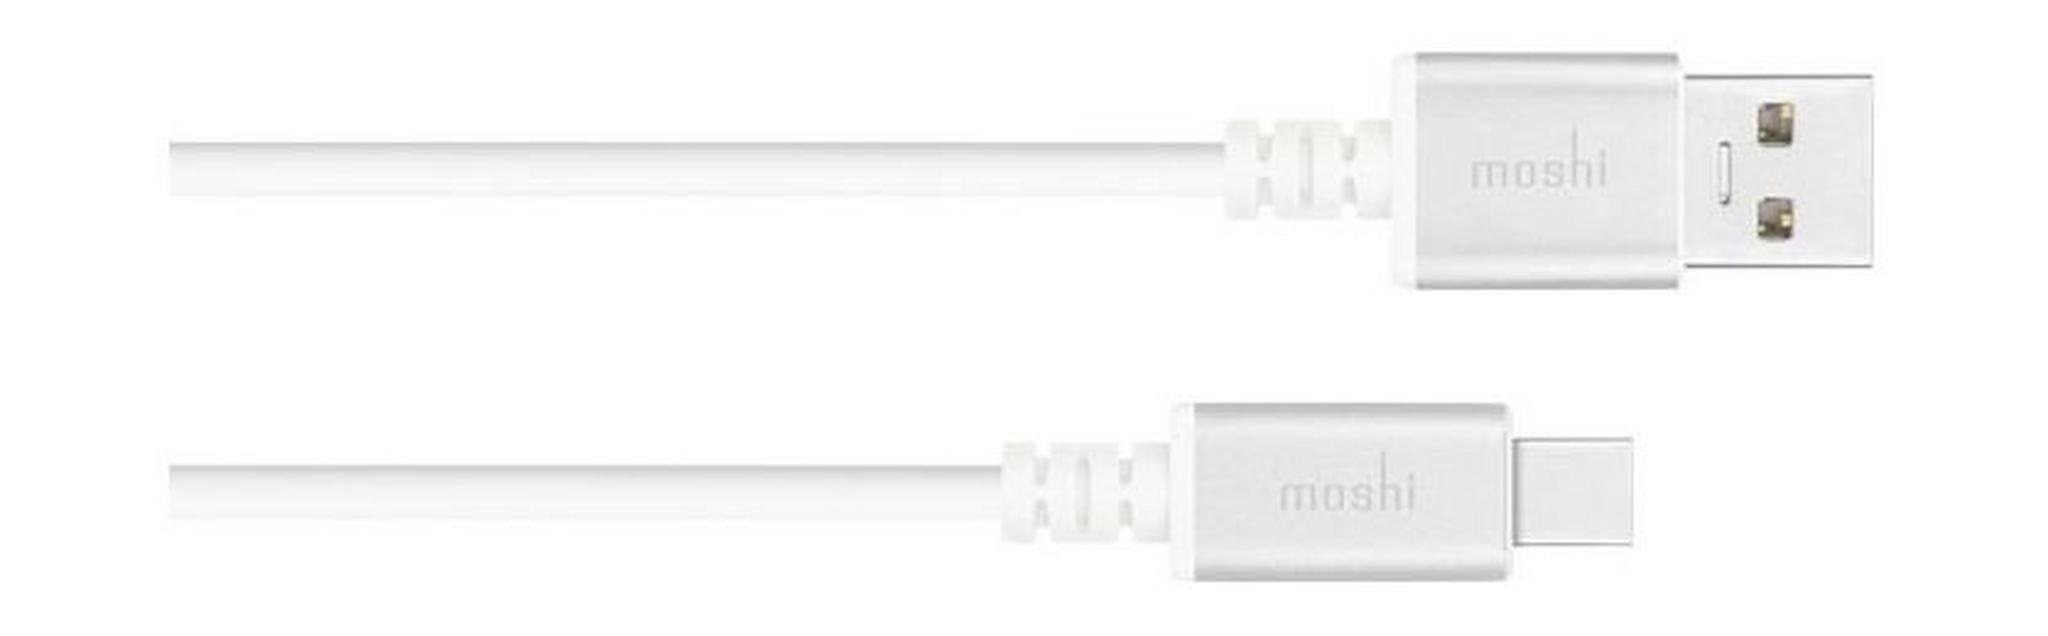 Moshi 1m USB-C to USB Cable (99MO084101) – White